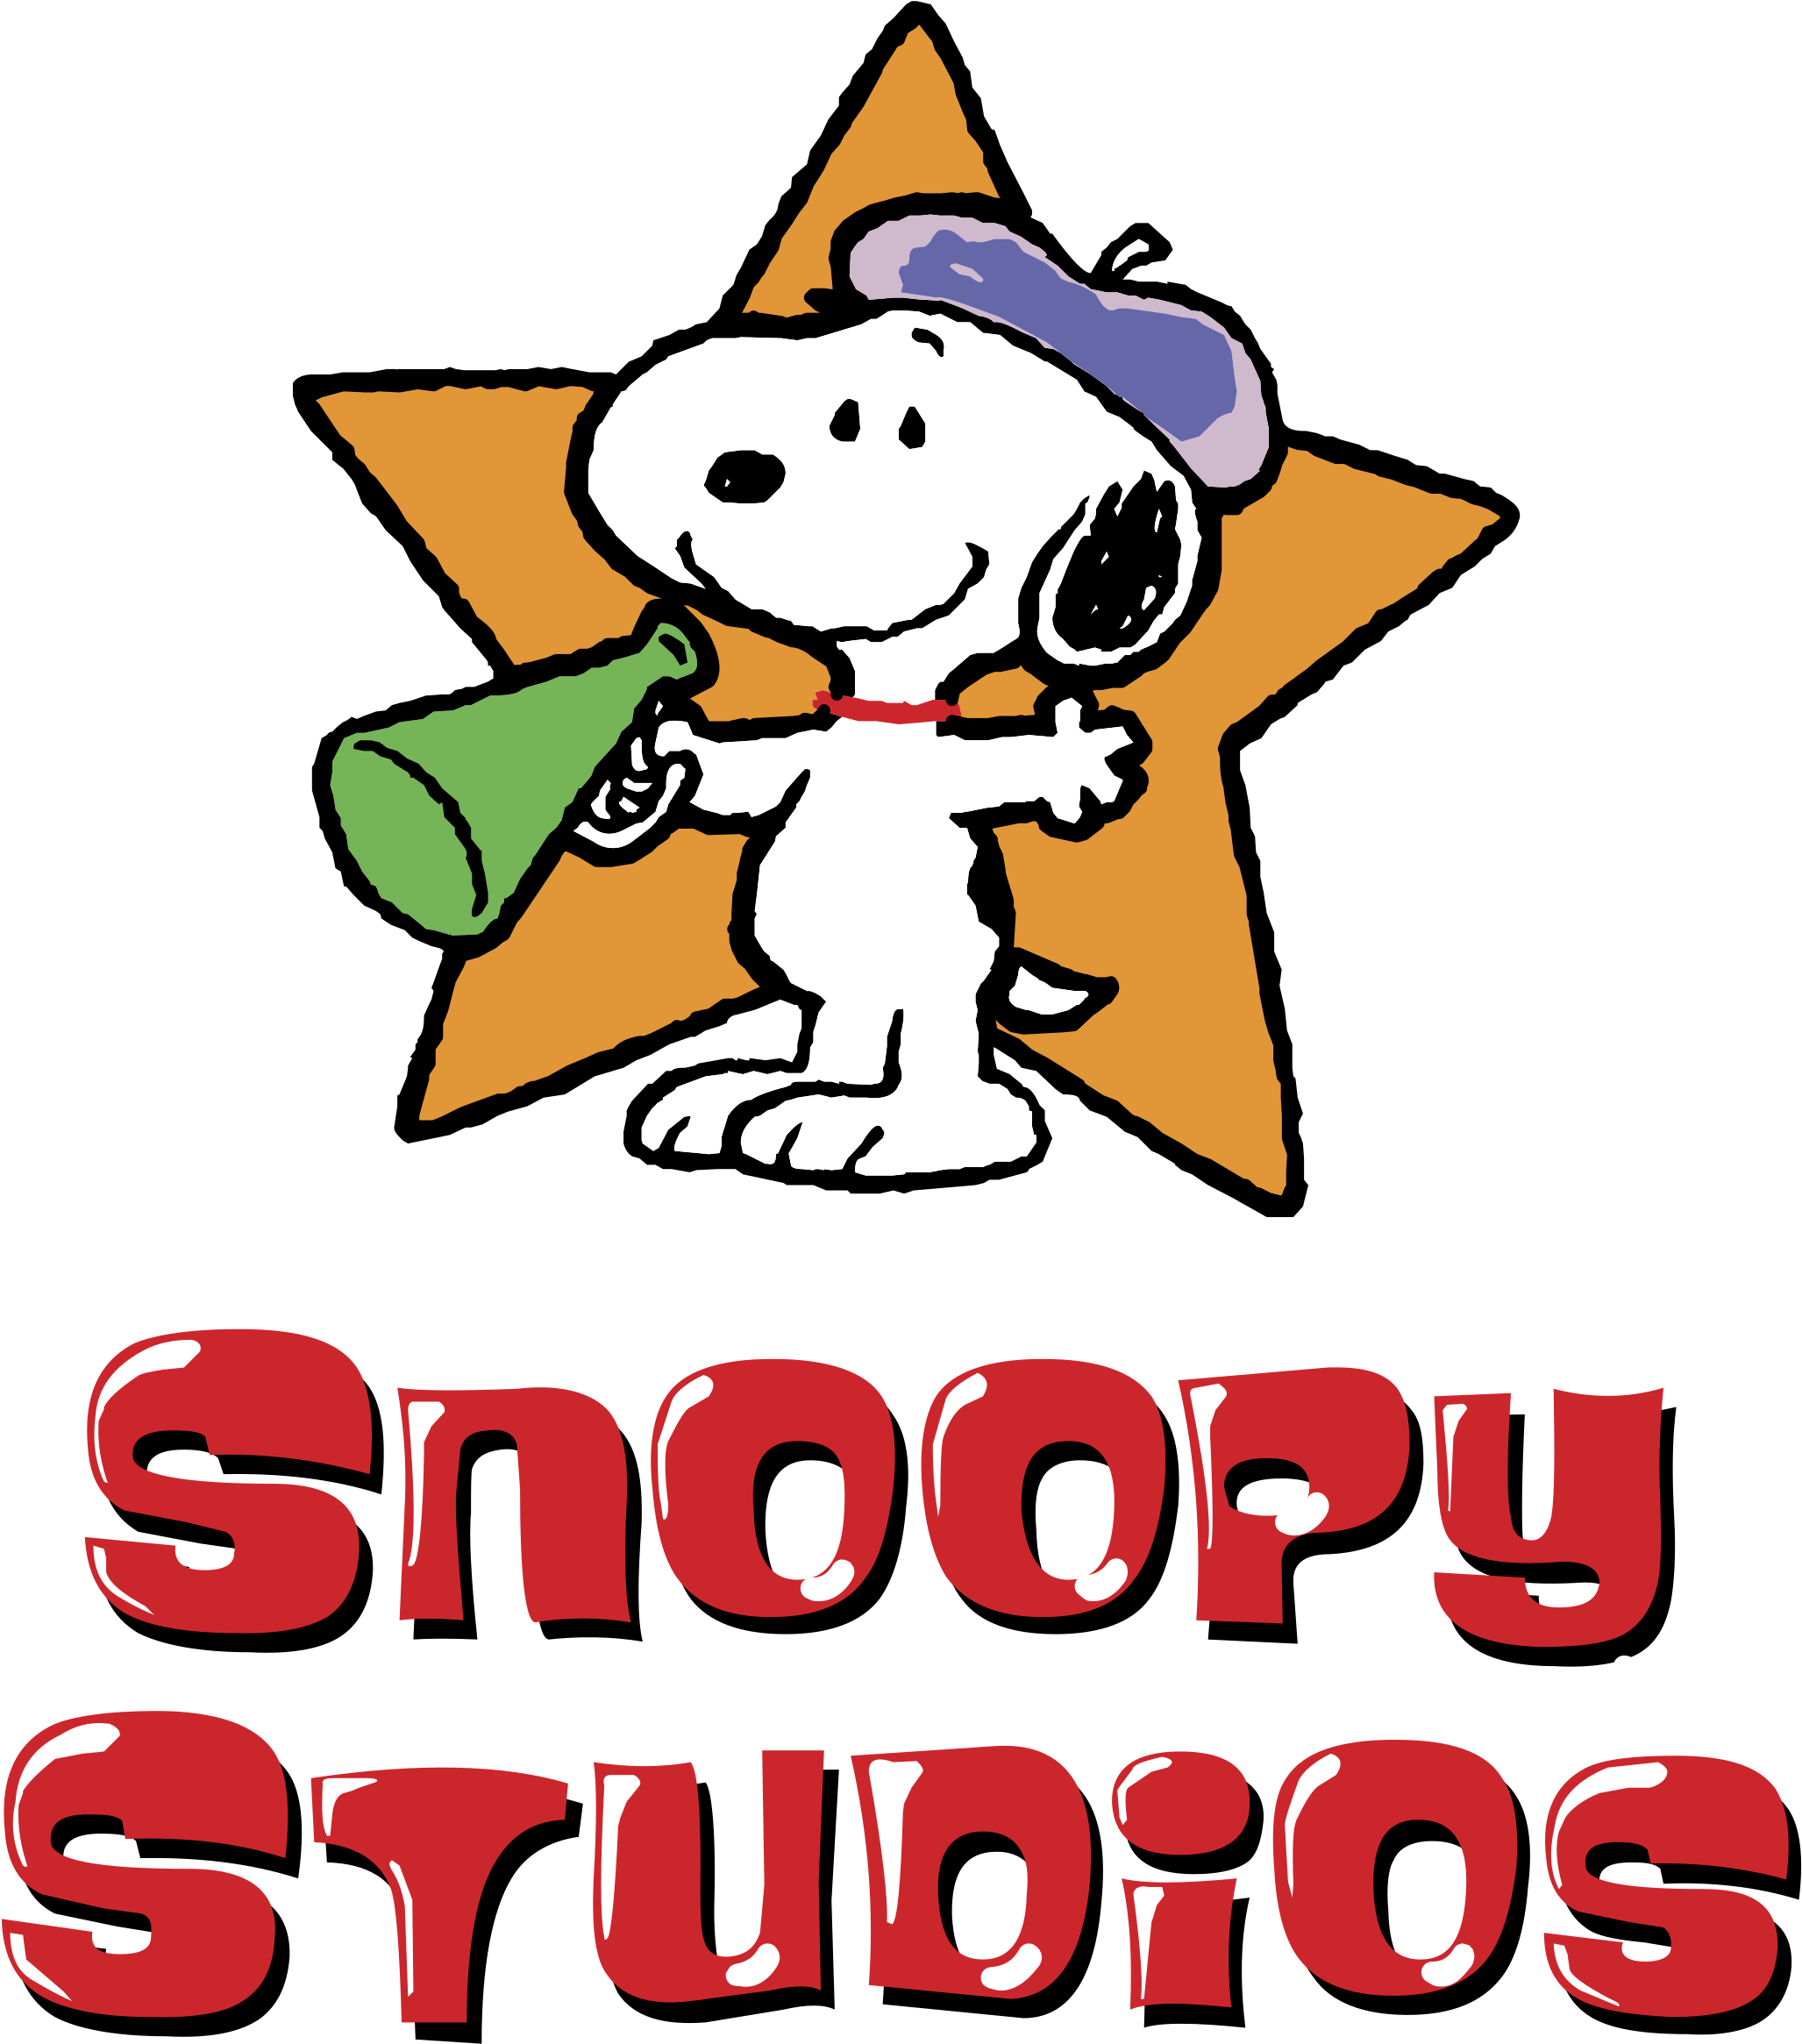 Snoopy Studios Logo Black And White - Snoopy (2400x2400)